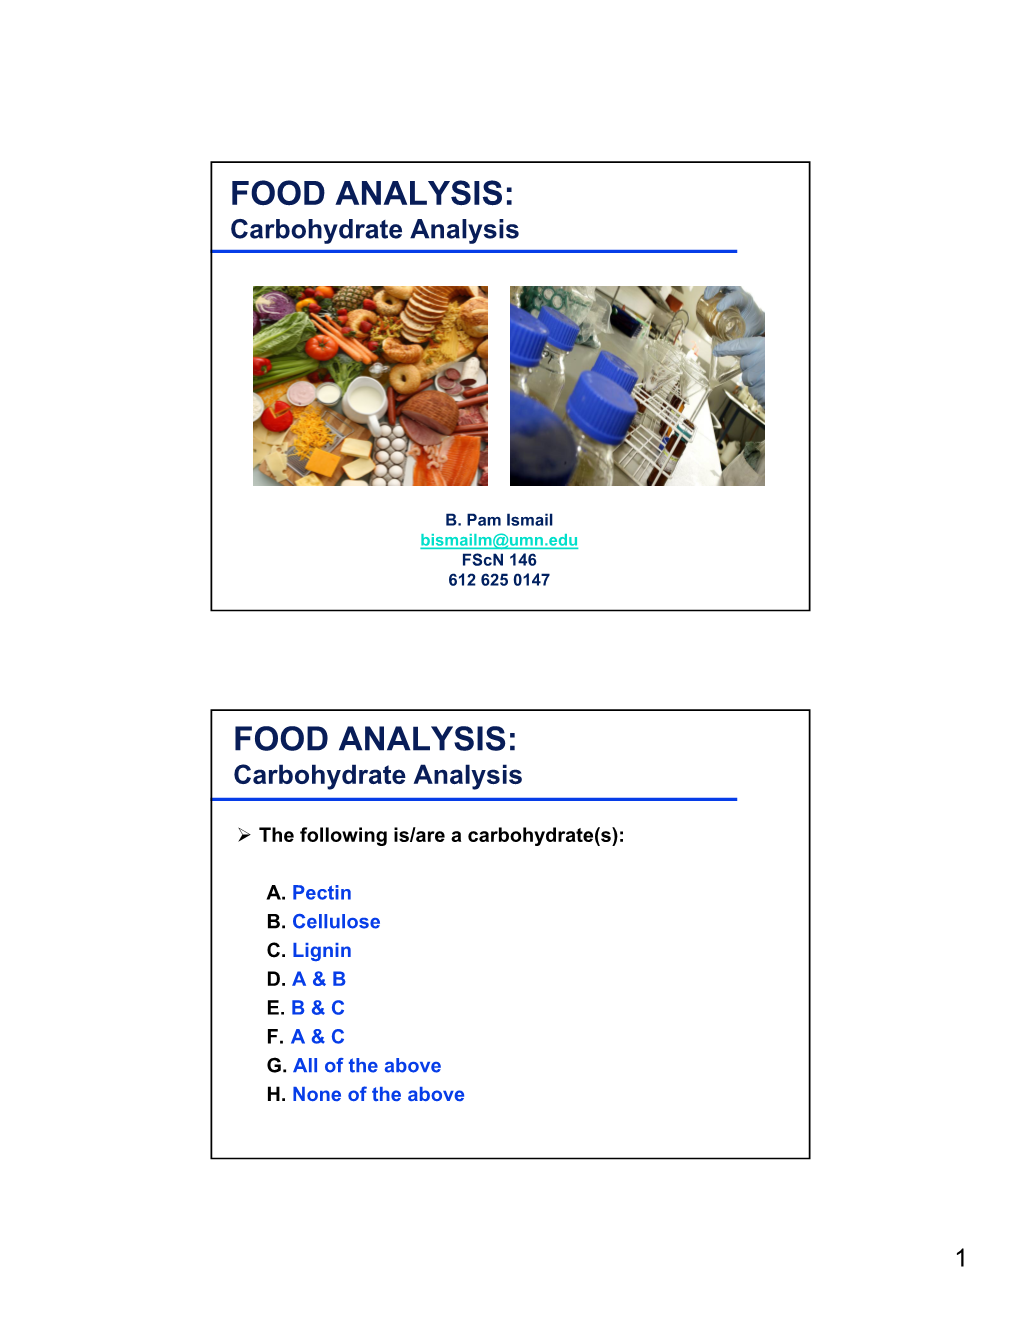 FOOD ANALYSIS: Carbohydrate Analysis